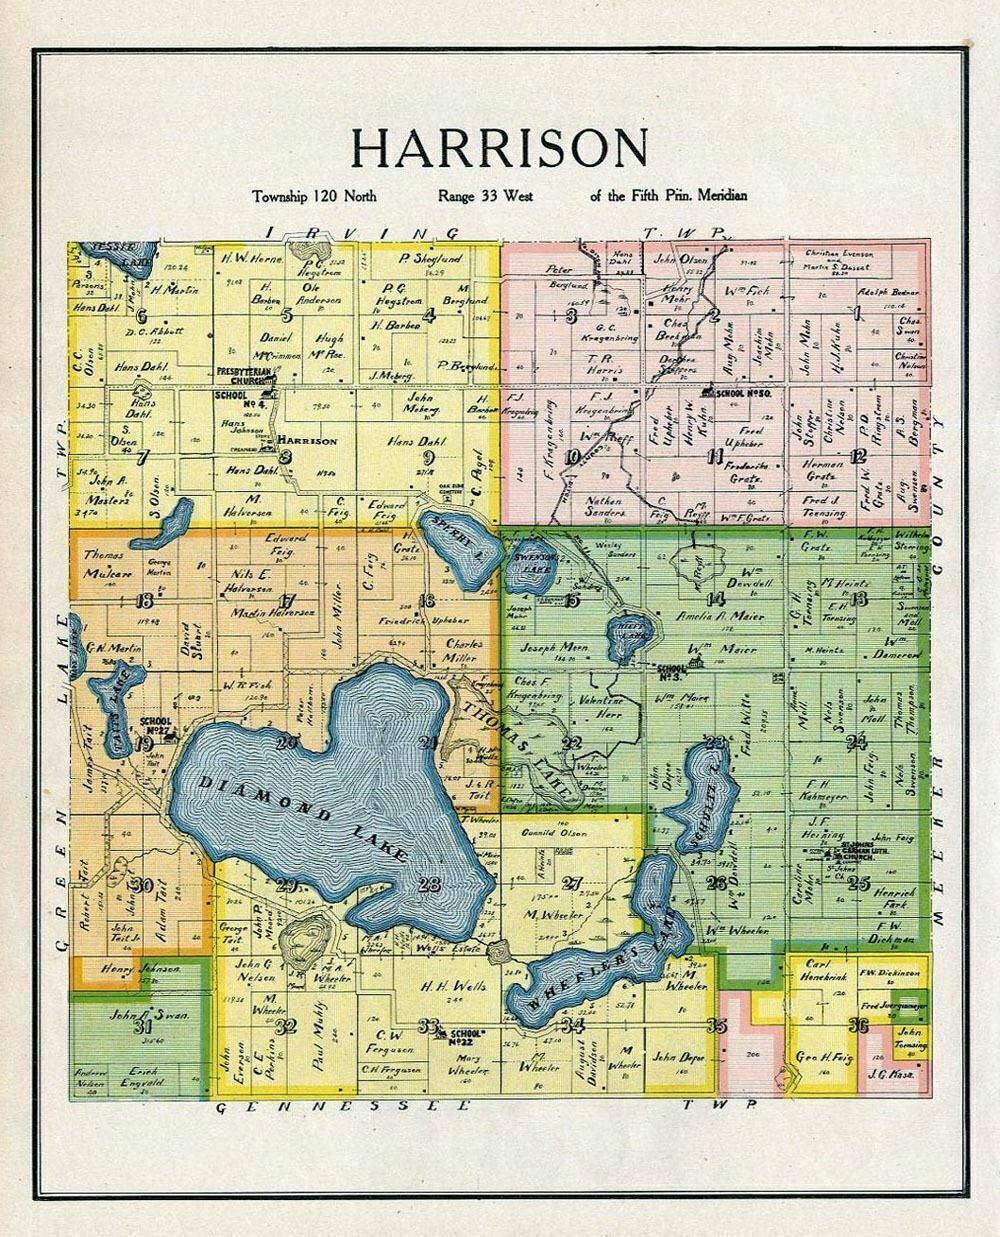 HARRISON TOWNSHIP, KANDIYOHI COUNTY MINNESOTA, RARE 1905 ANTIQUE MAP, GENEALOGY